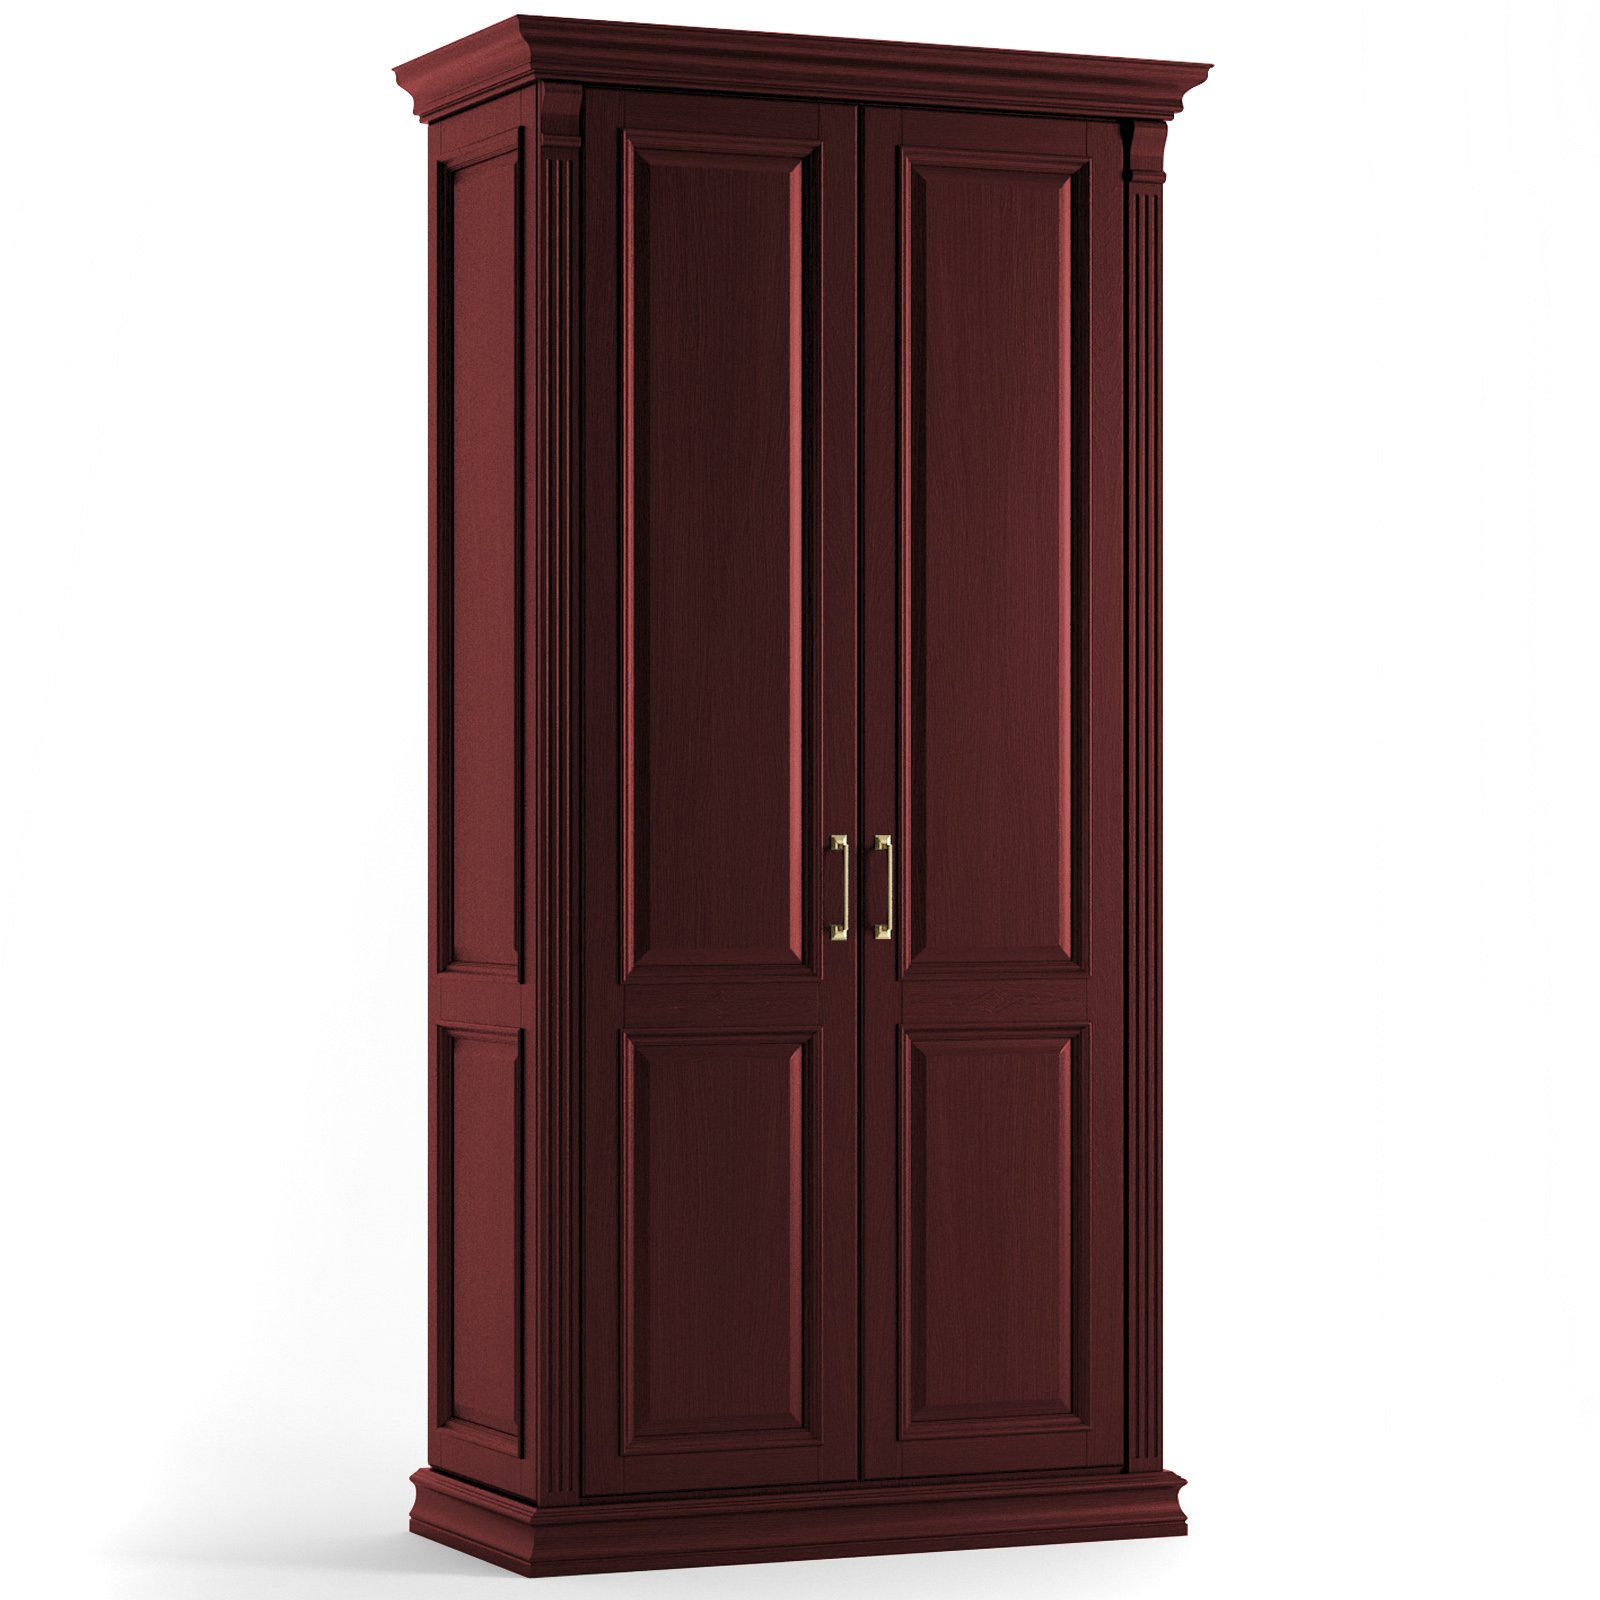 Шкаф платяной SDK Home Rimar двухдверный, цвет: шато (RM.P02.102х64.U.S)RM.P02.102х64.U.S